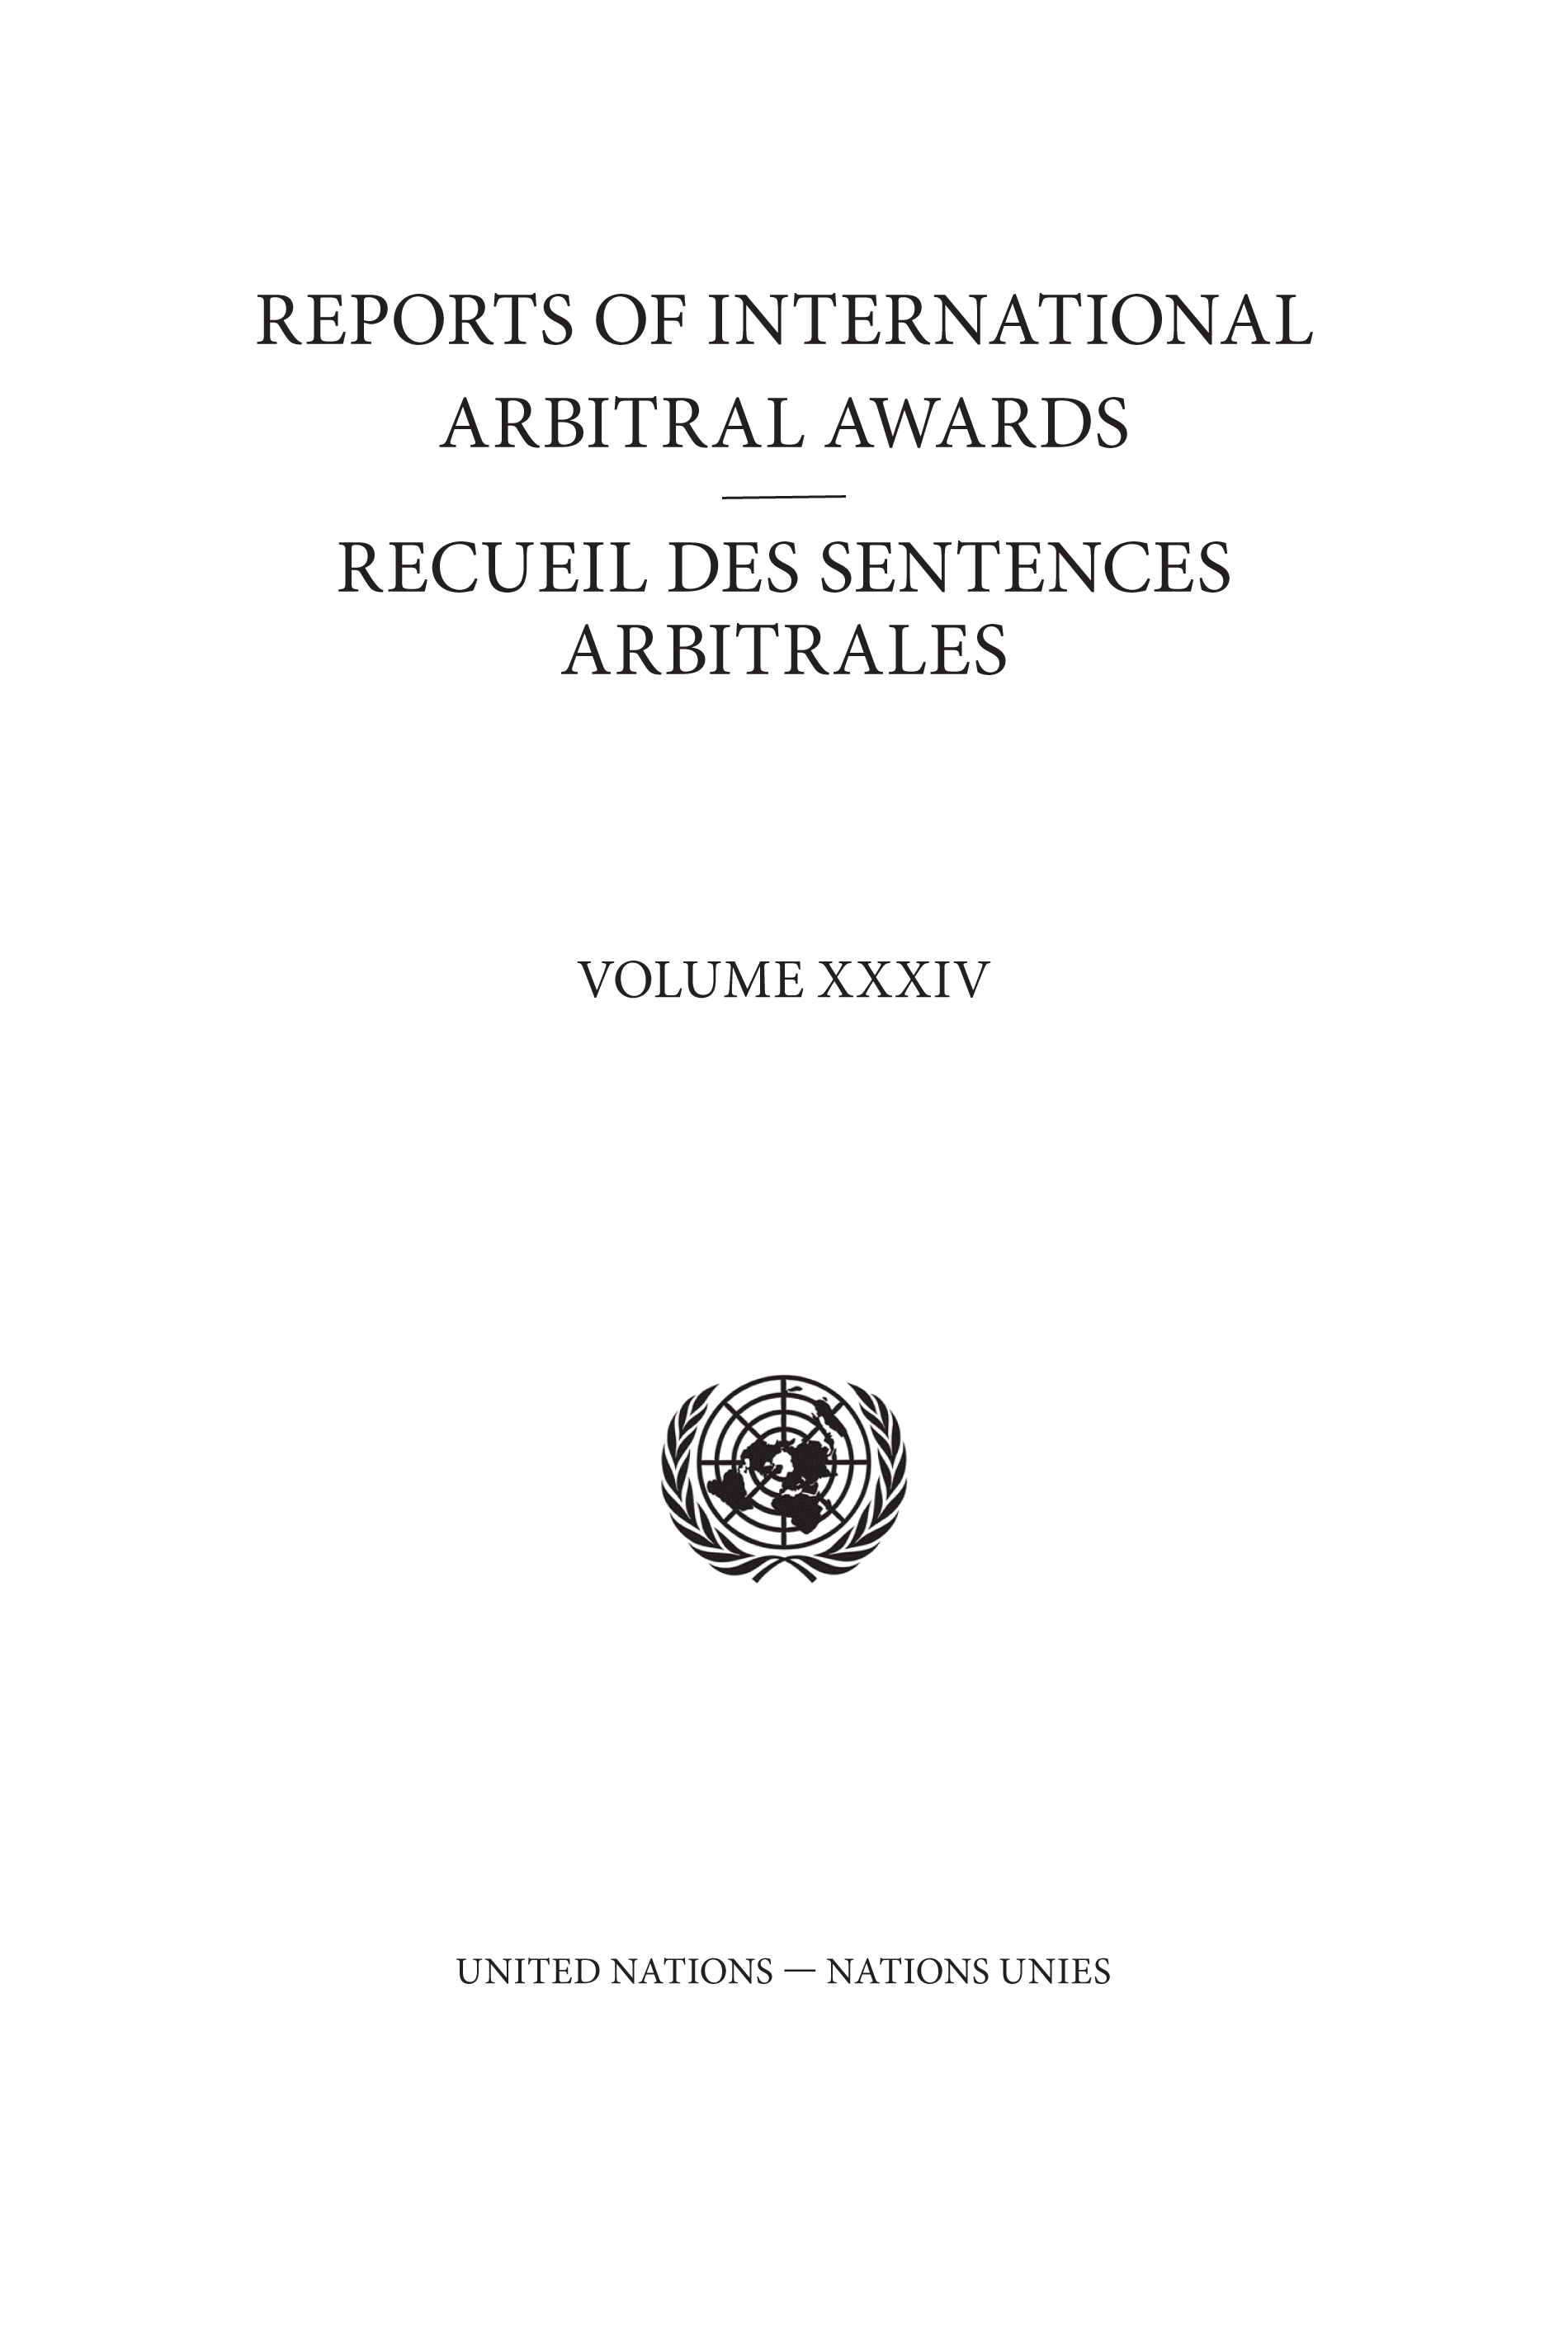 image of Recueil des sentences arbitrales, vol. XXXIV